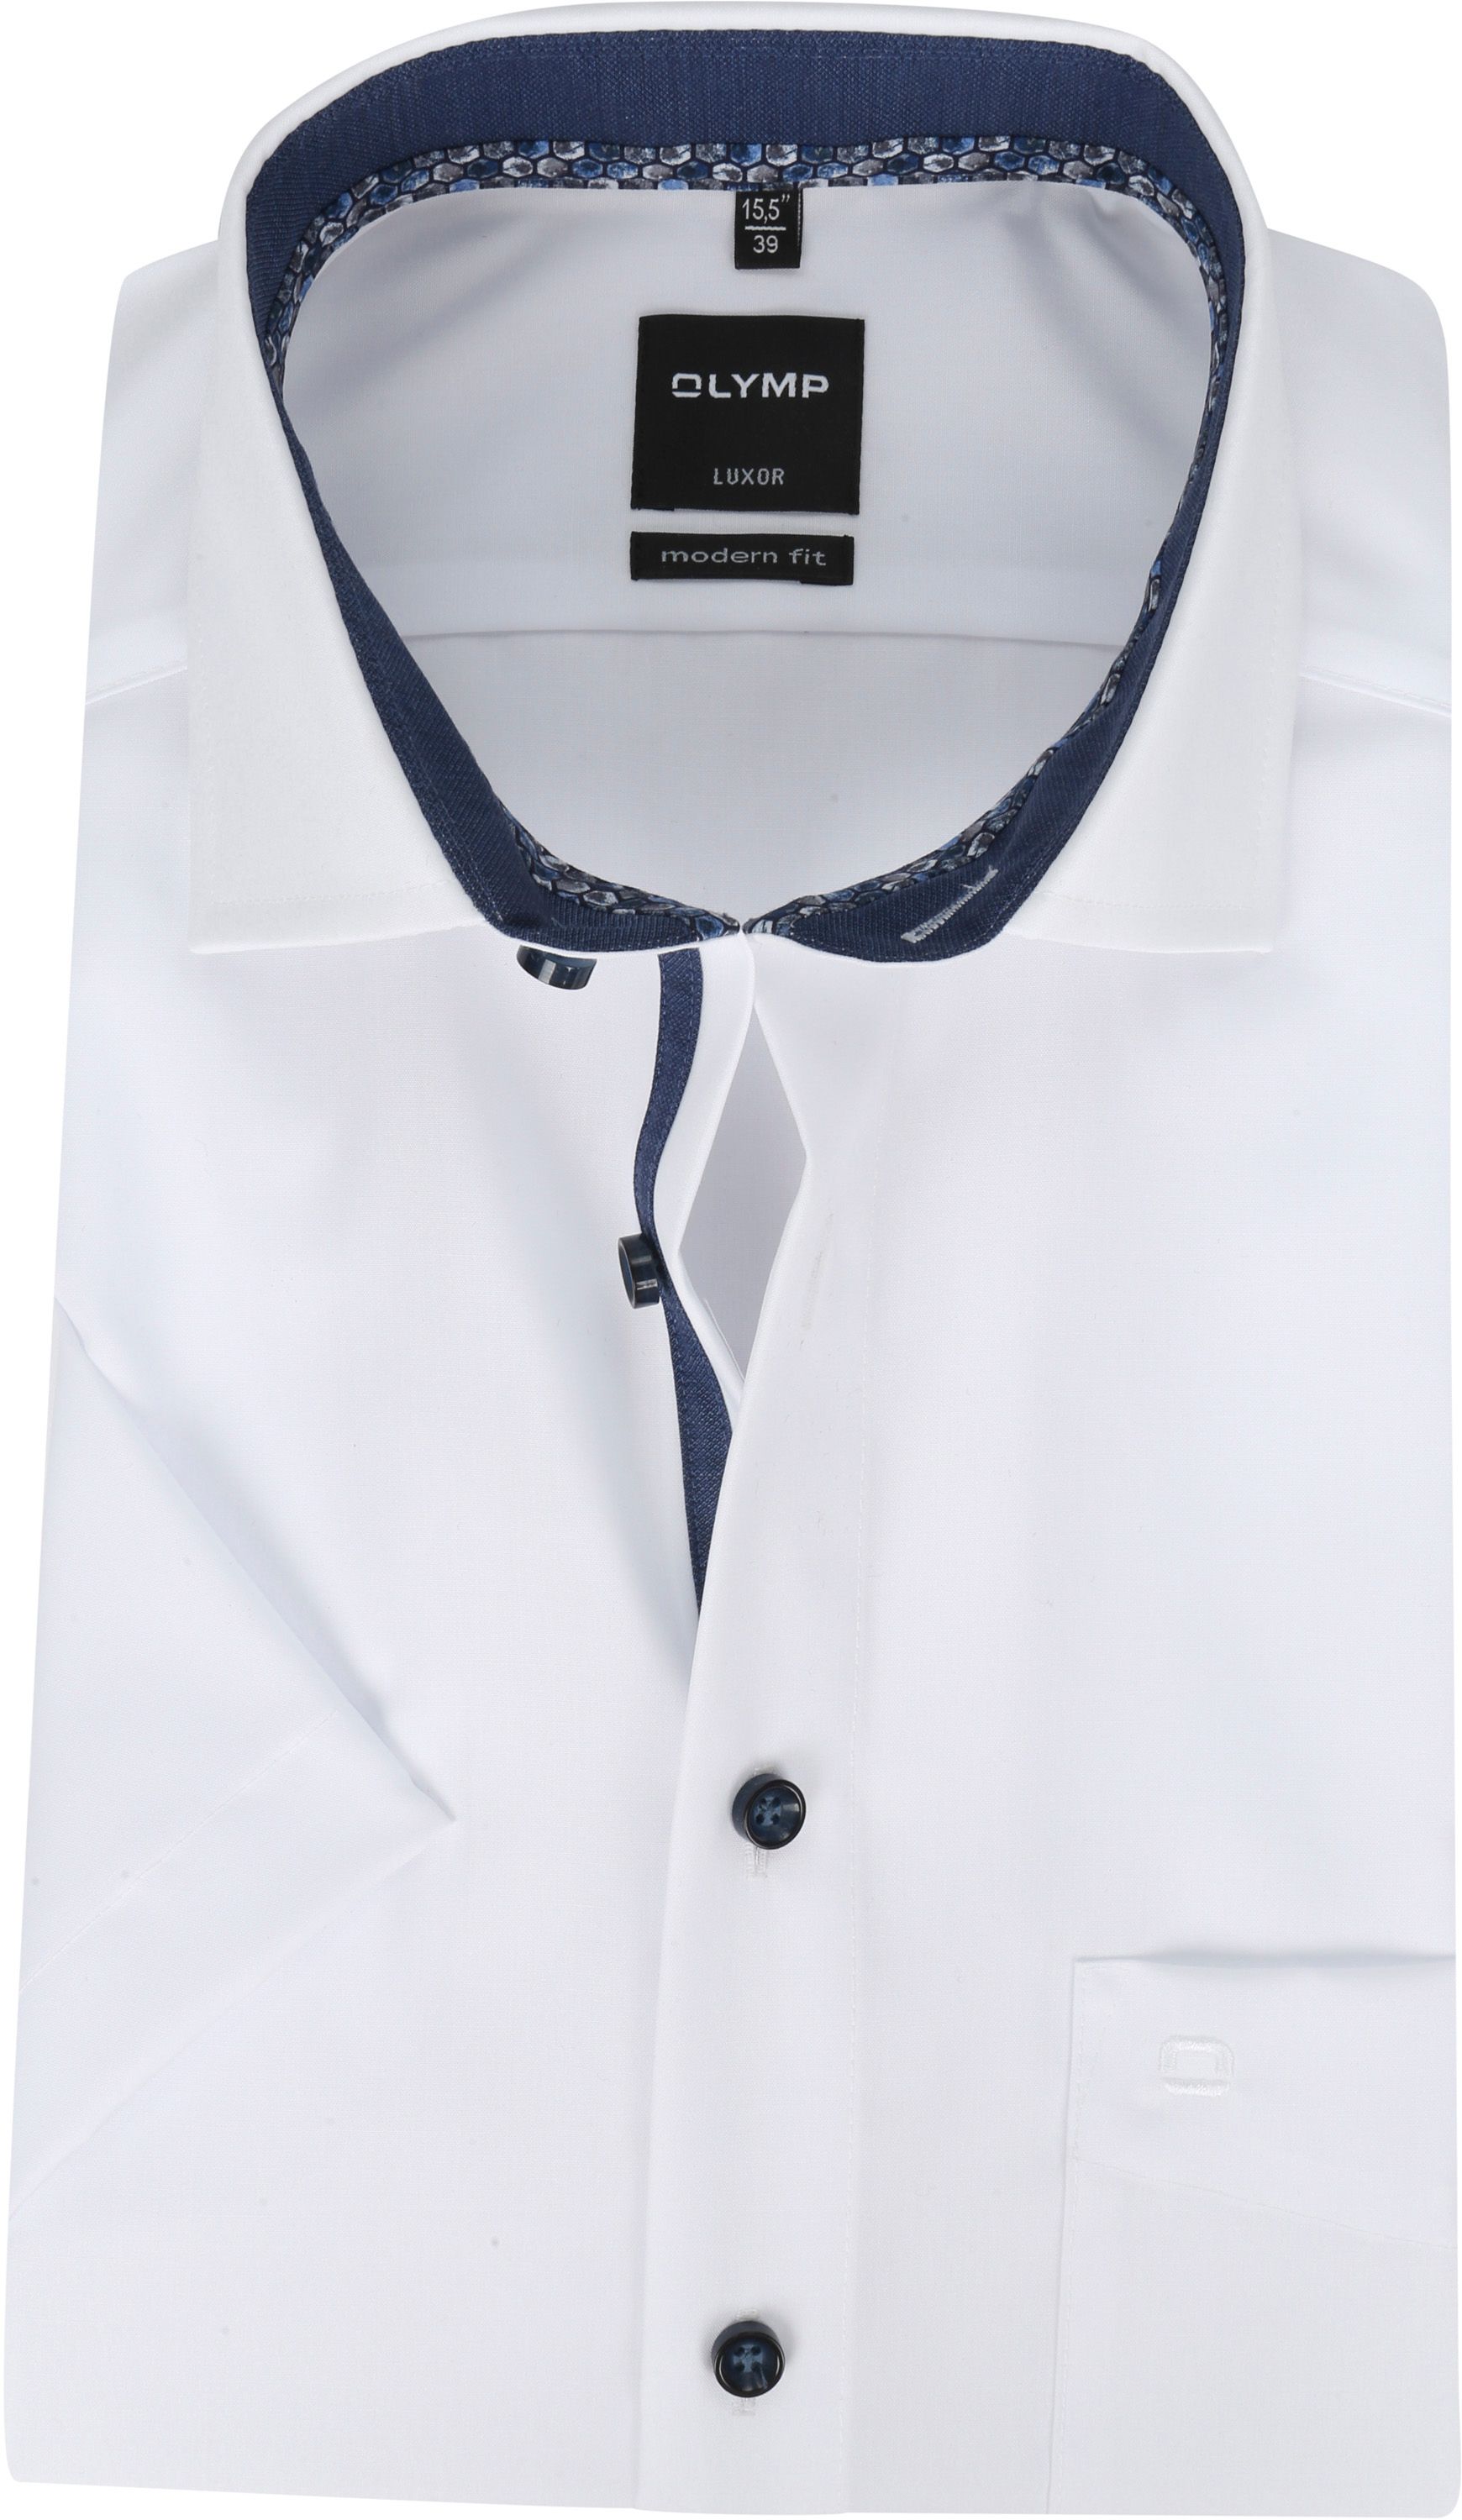 Olymp SS Luxor MF Shirt White size 15